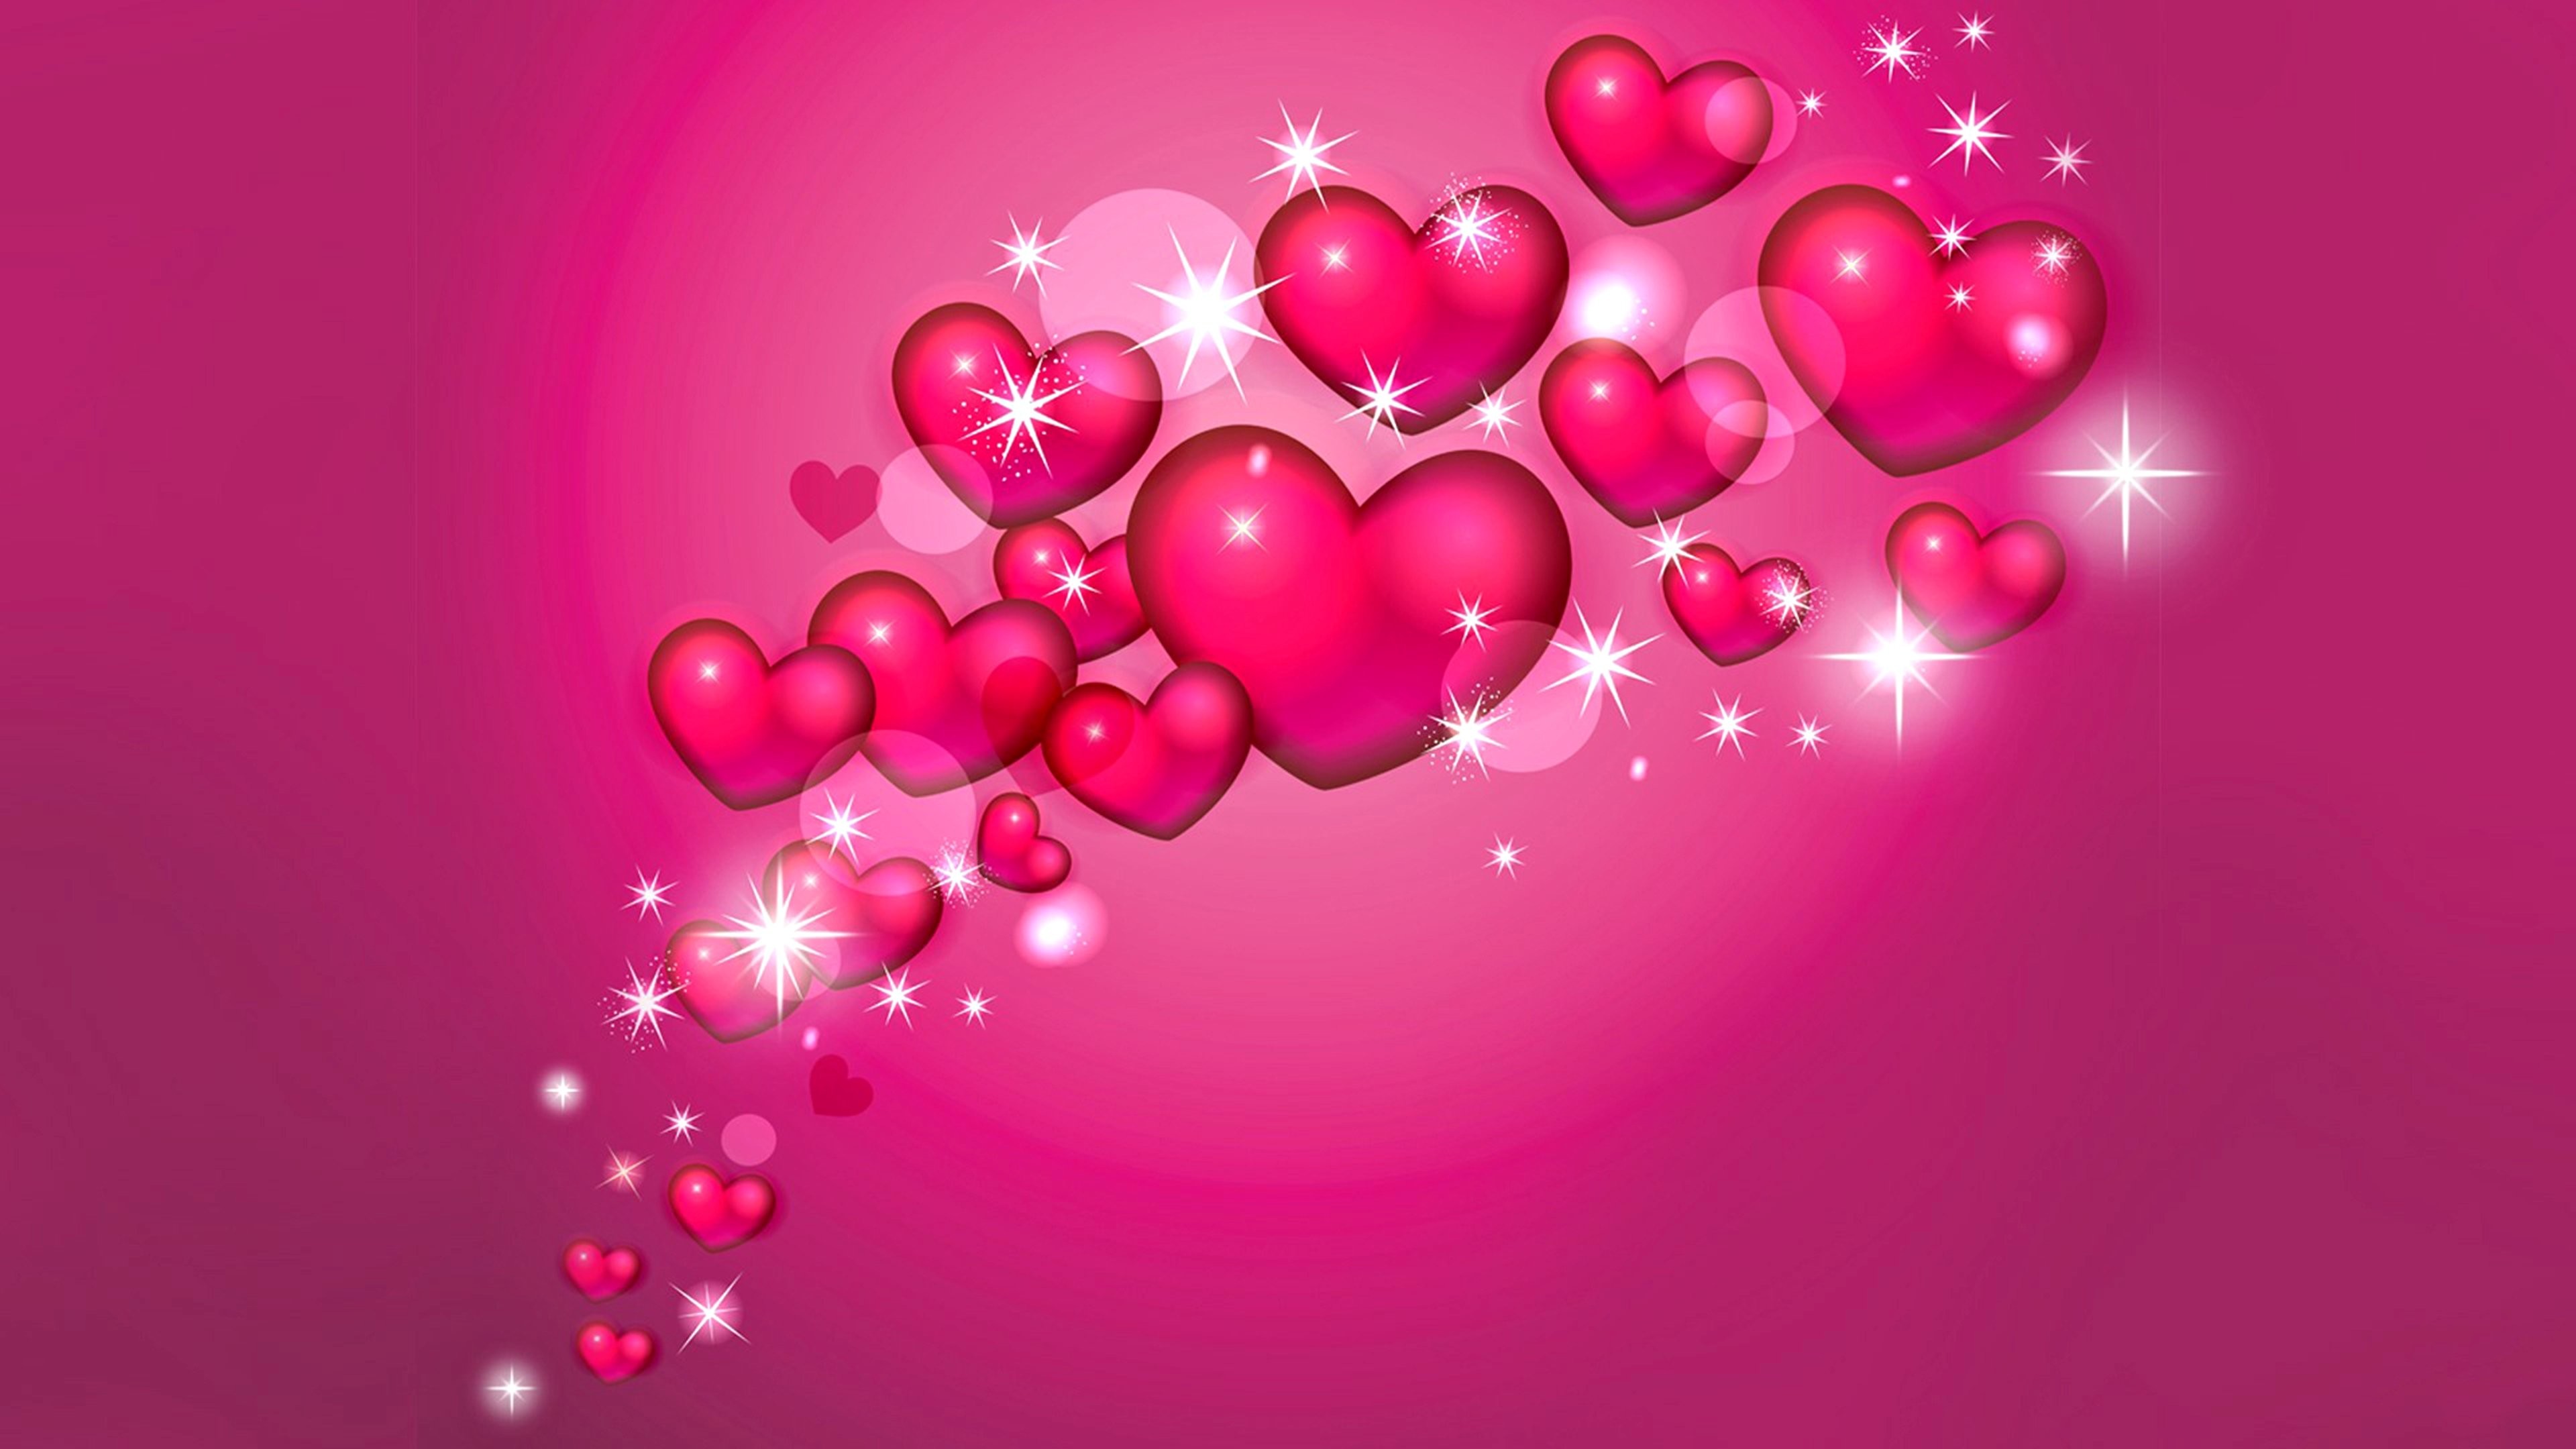 3840x2160, Artistic - Pink Love Wallpaper Rose - HD Wallpaper 